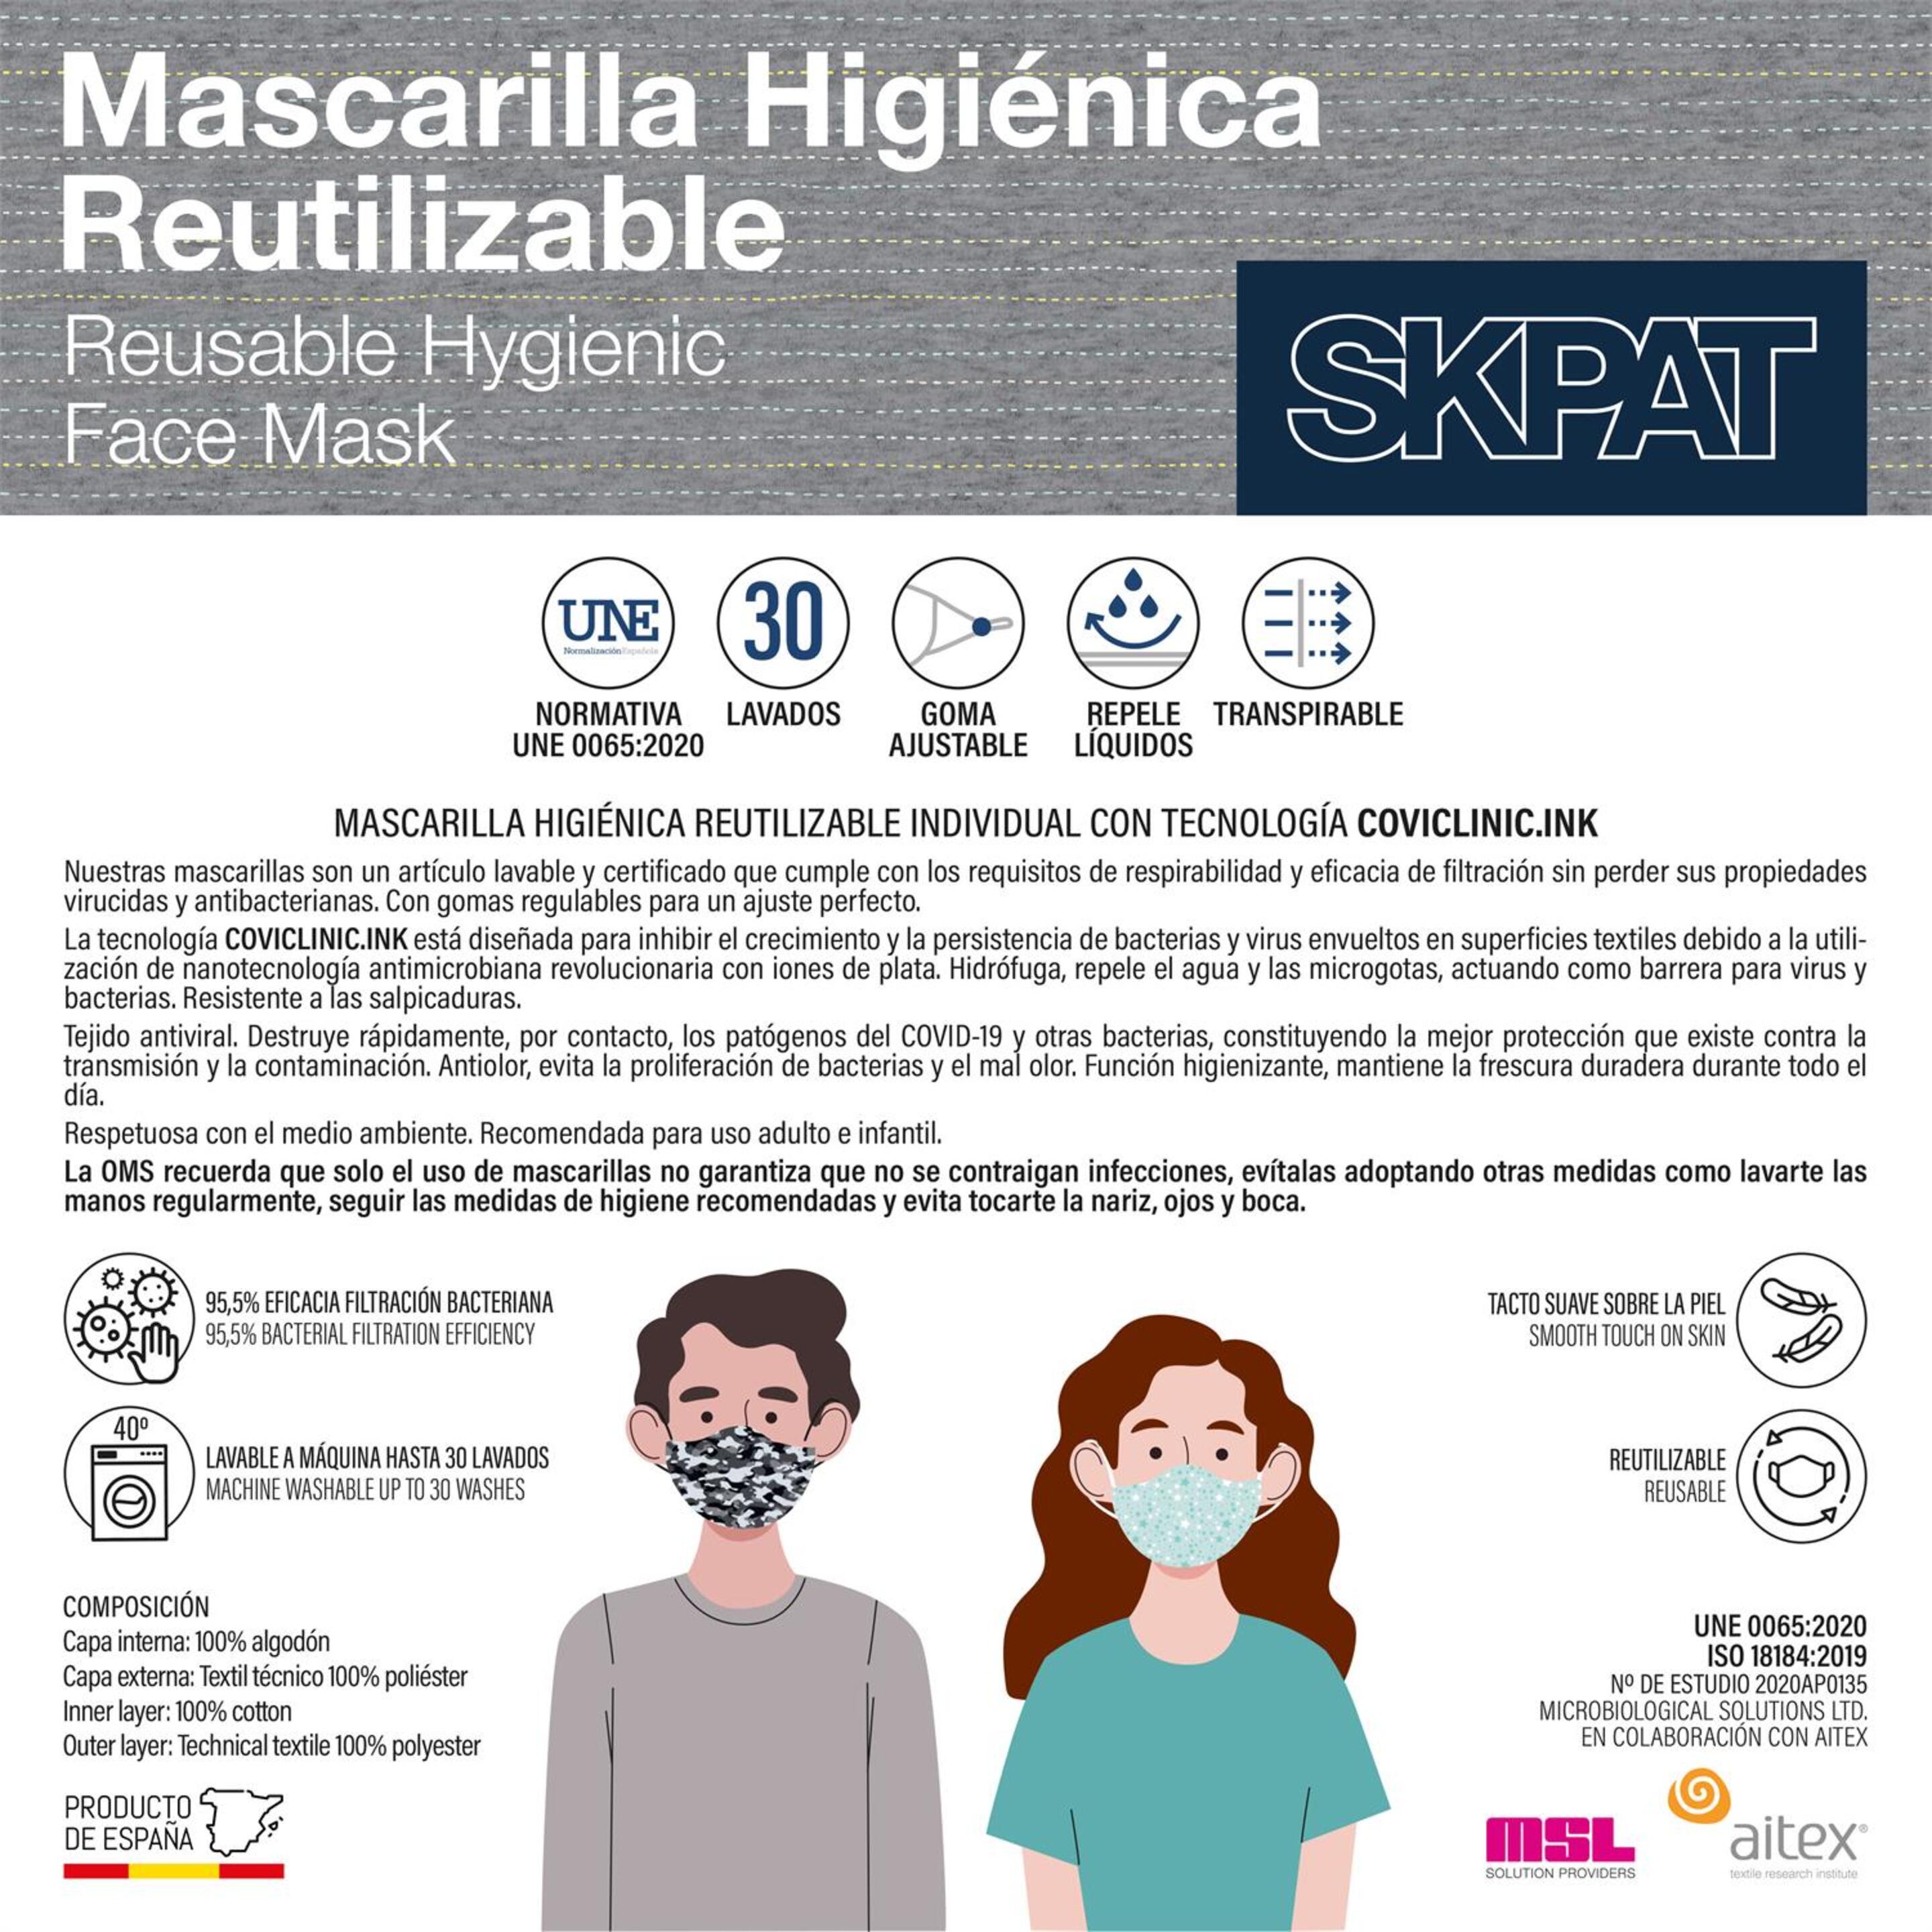 Mascarilla Higiénica Reutilizable Beck Skpat